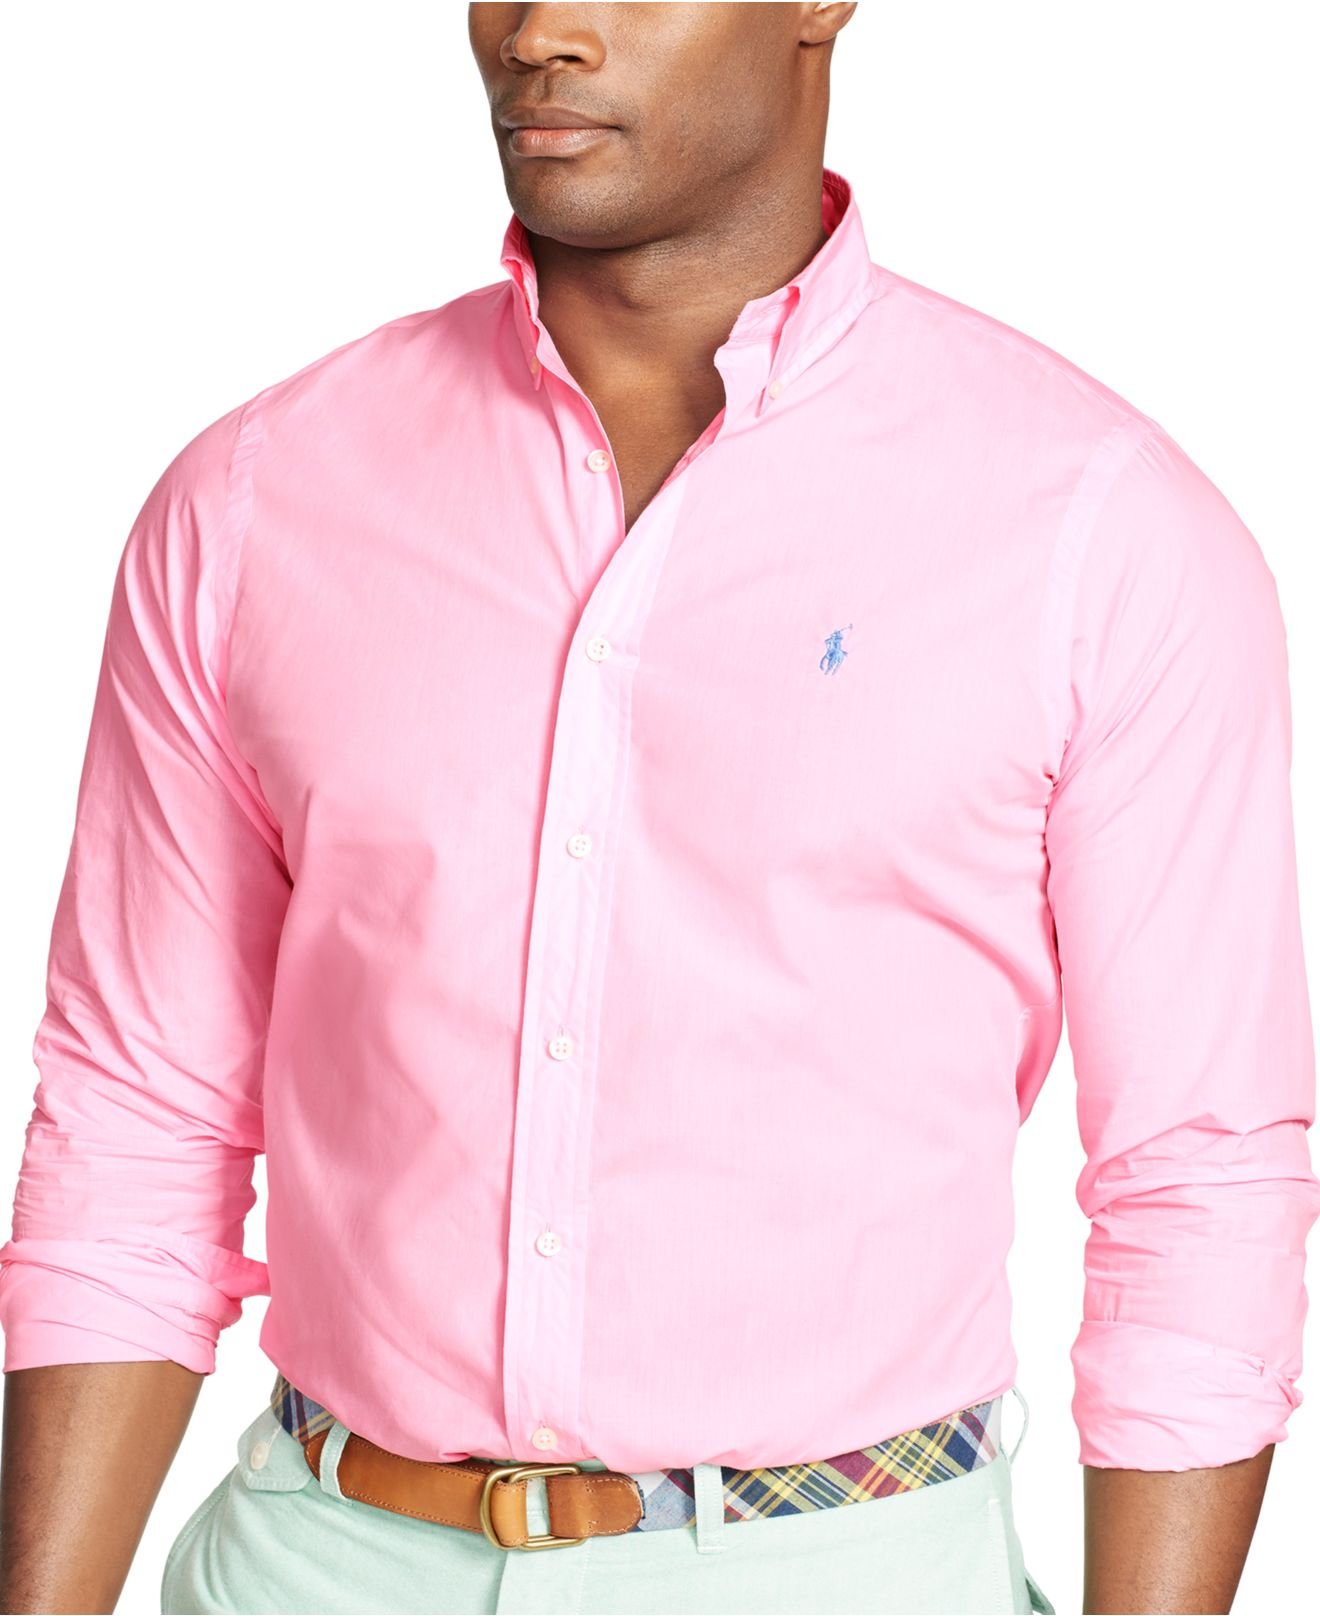 Lyst - Polo Ralph Lauren Big And Tall Long-Sleeve Poplin Shirt in Pink